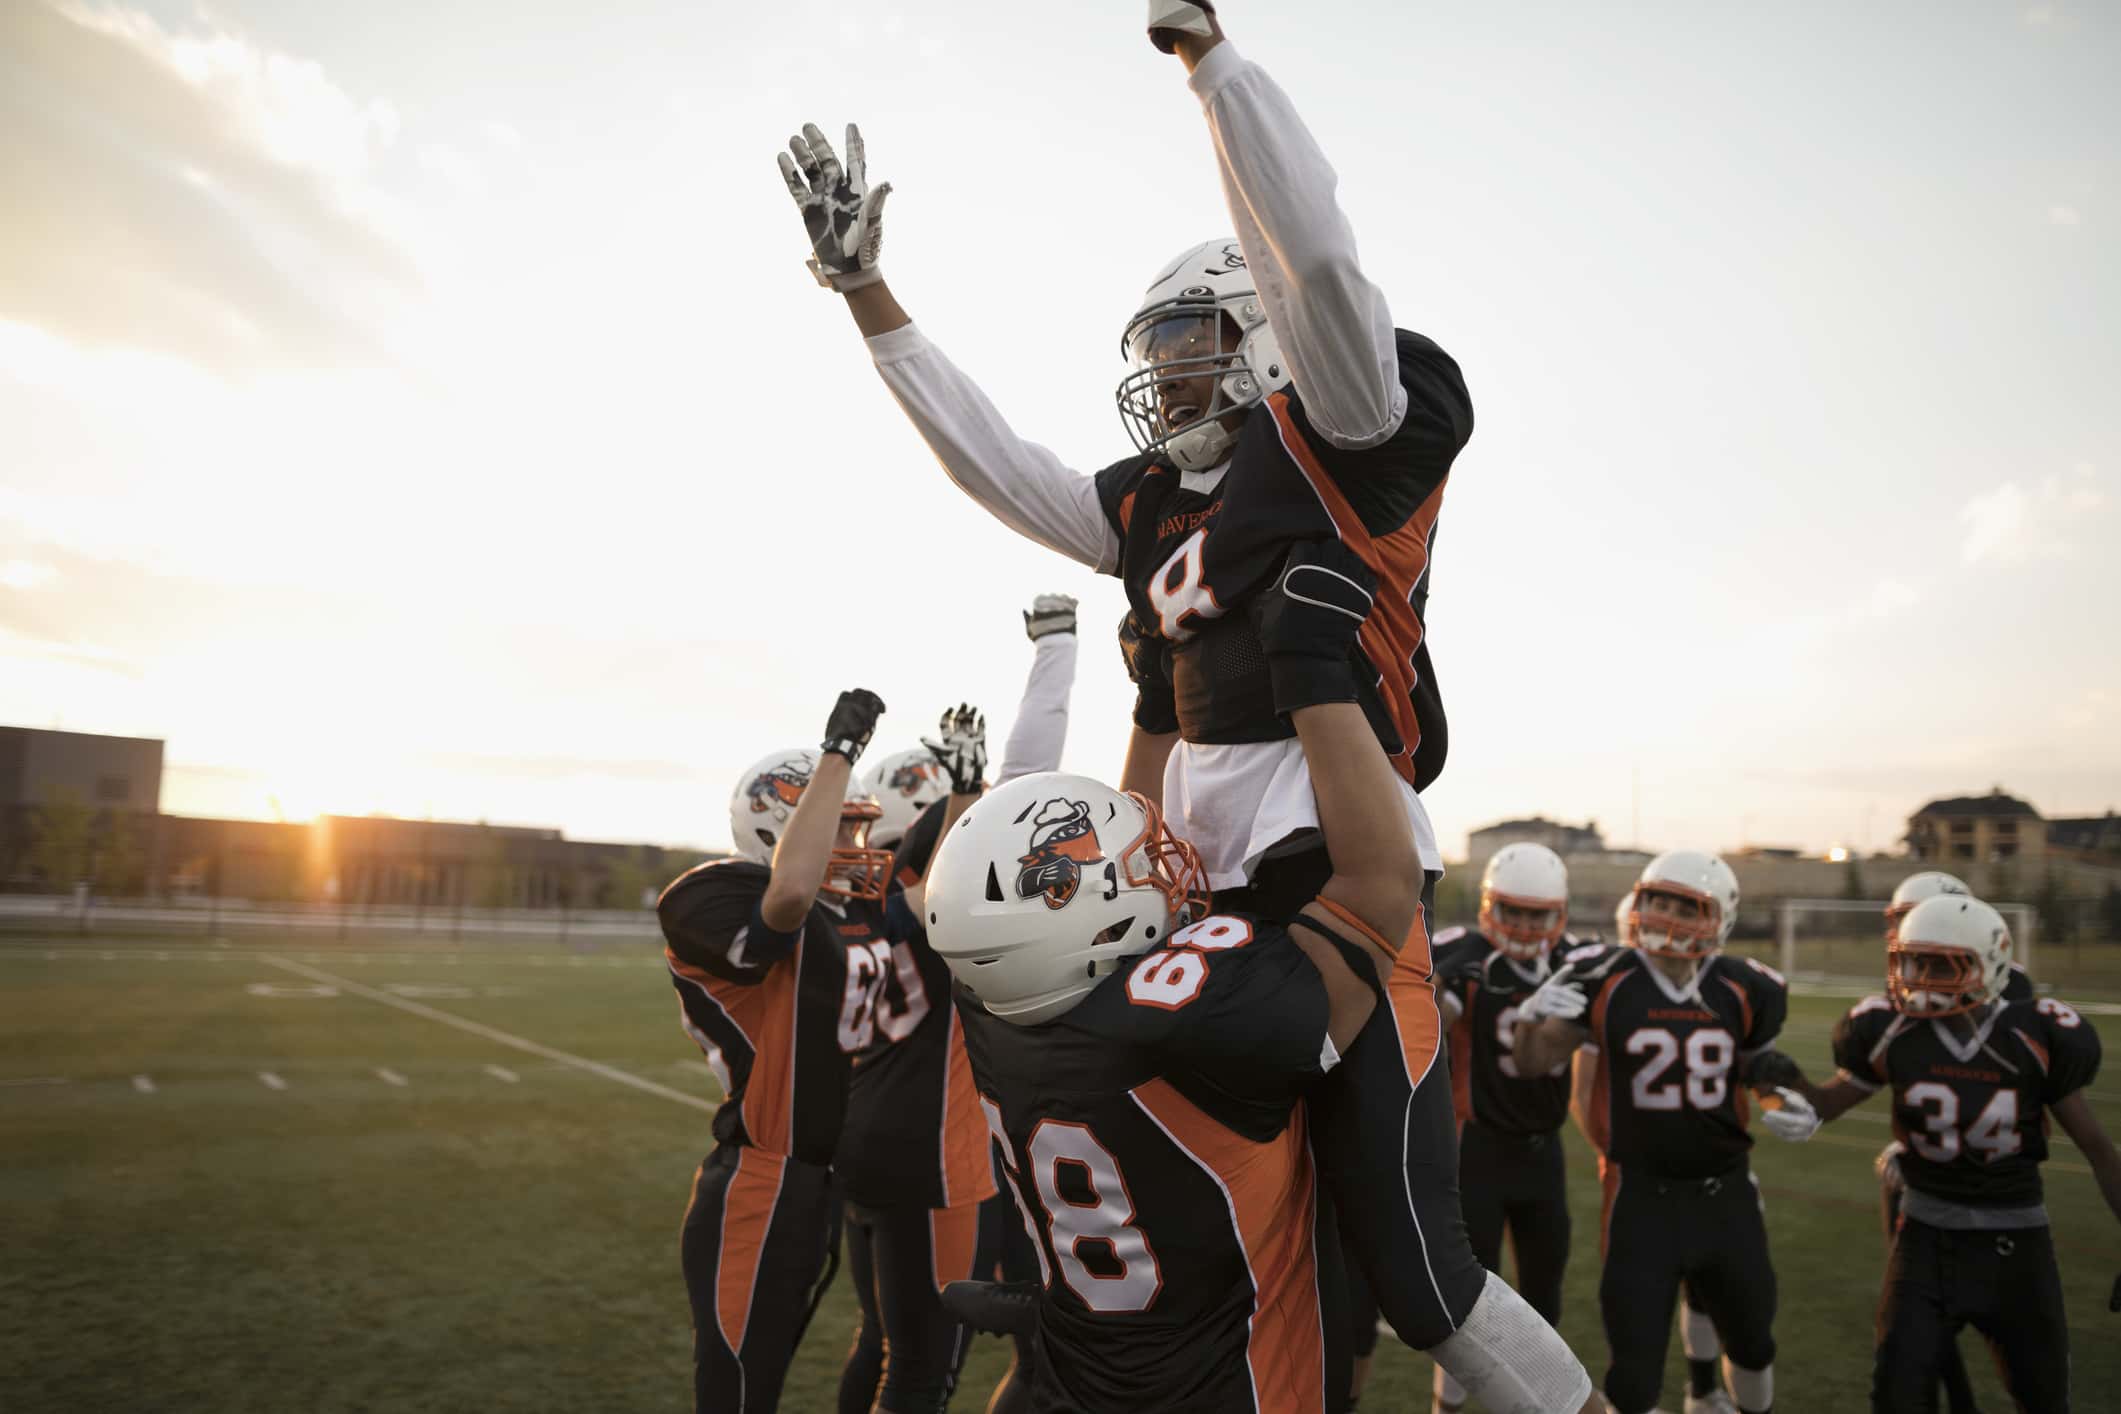 Teenage boy high school football players lifting celebrating, cheering teammate on football field